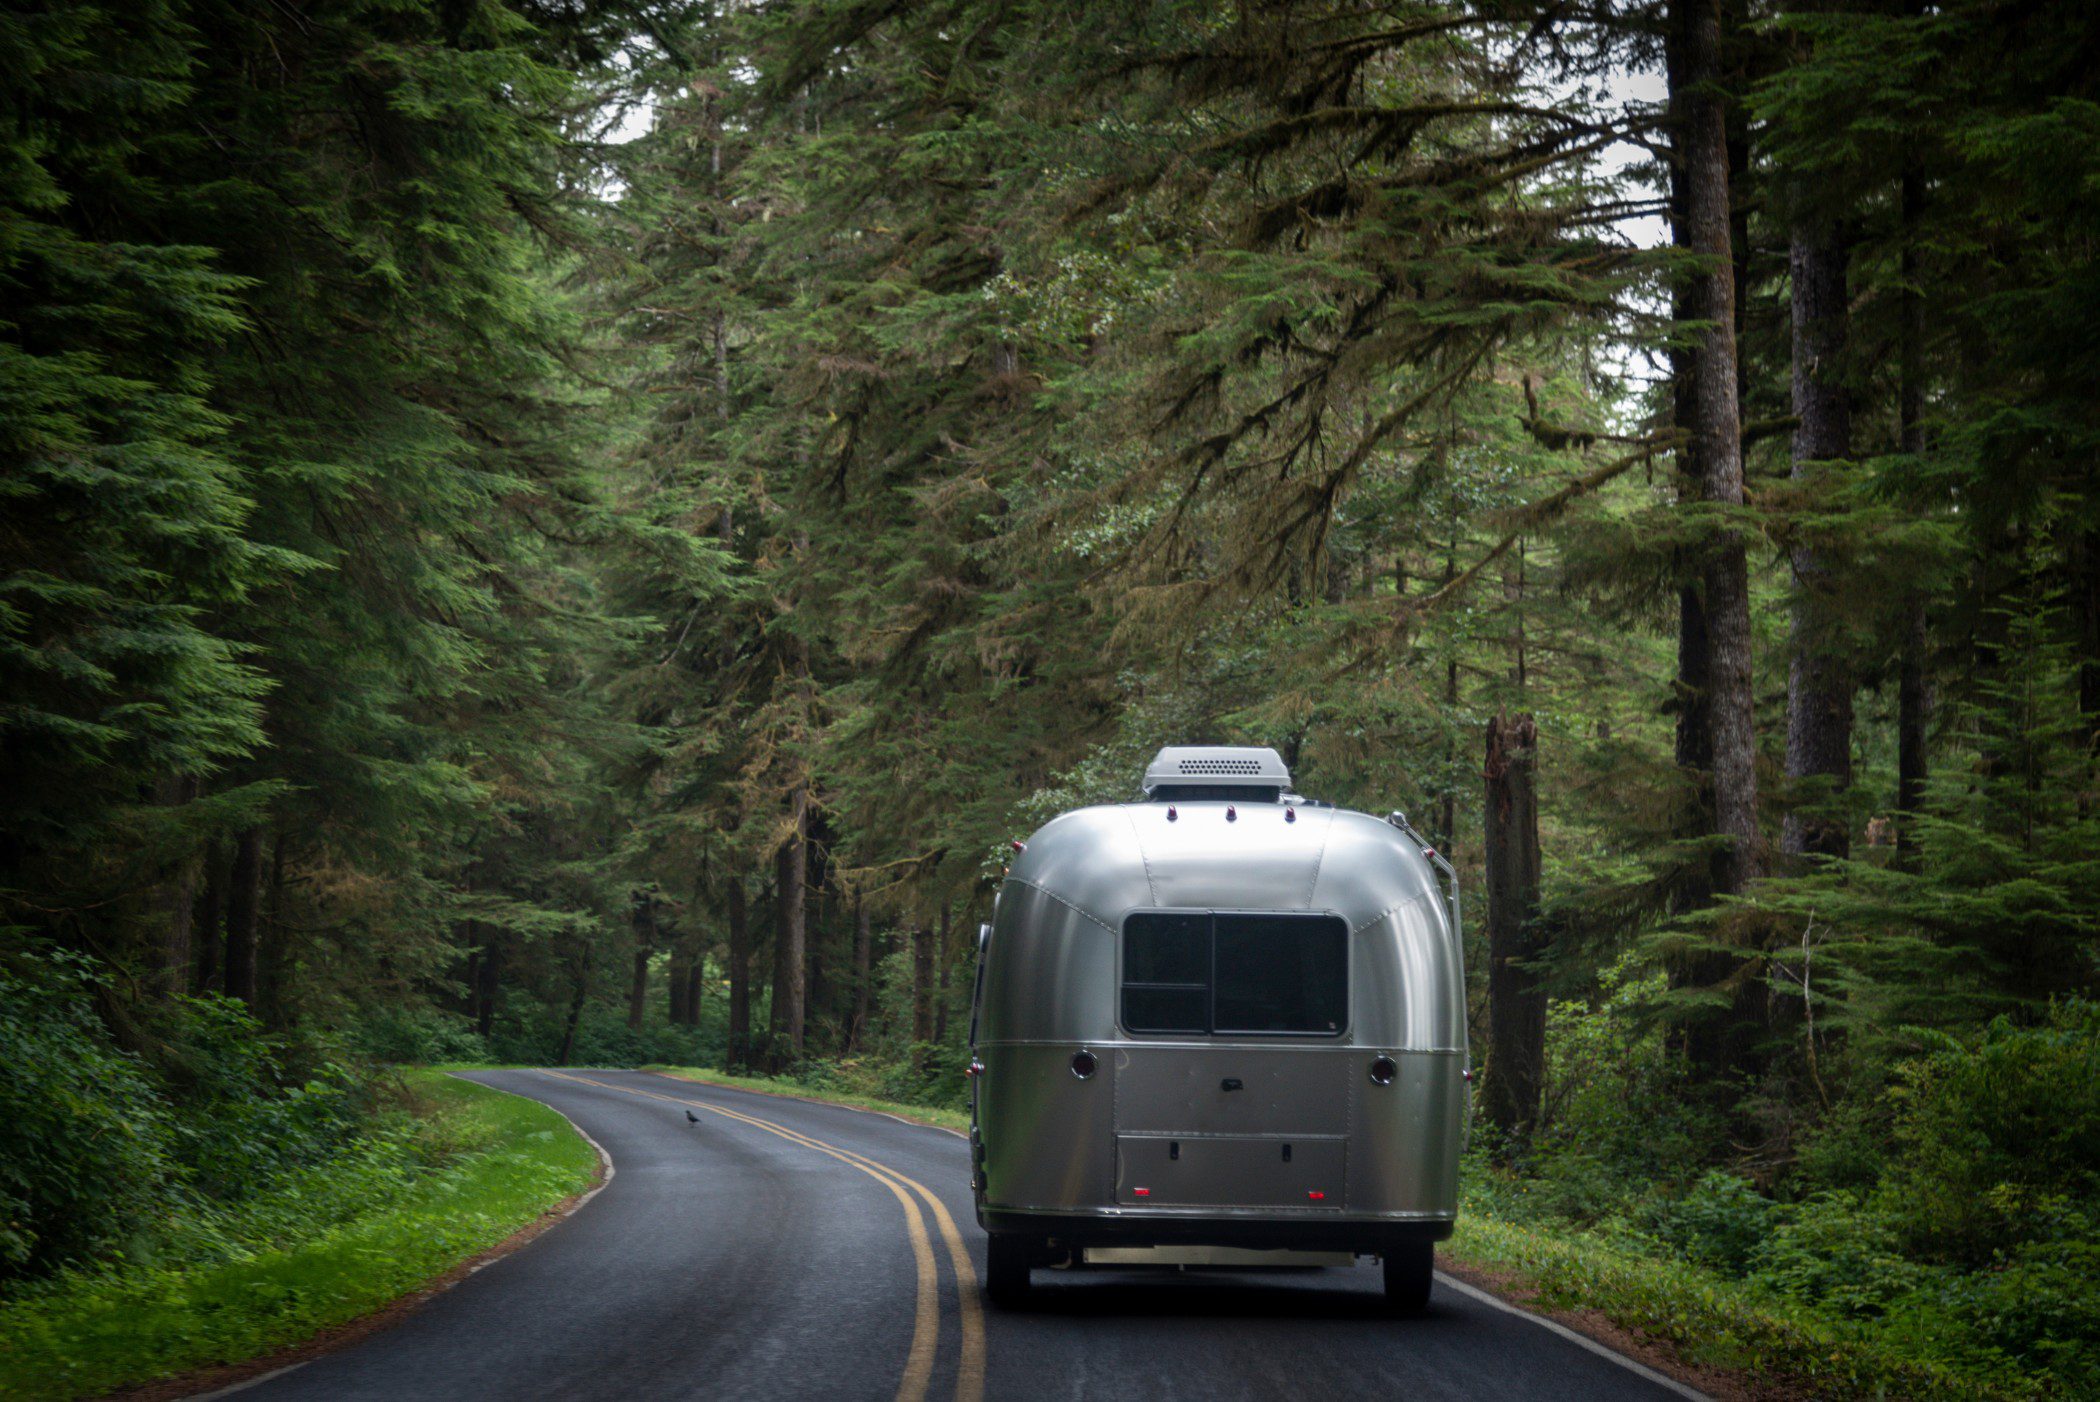 Can Passengers Ride Inside a Camper Trailer?